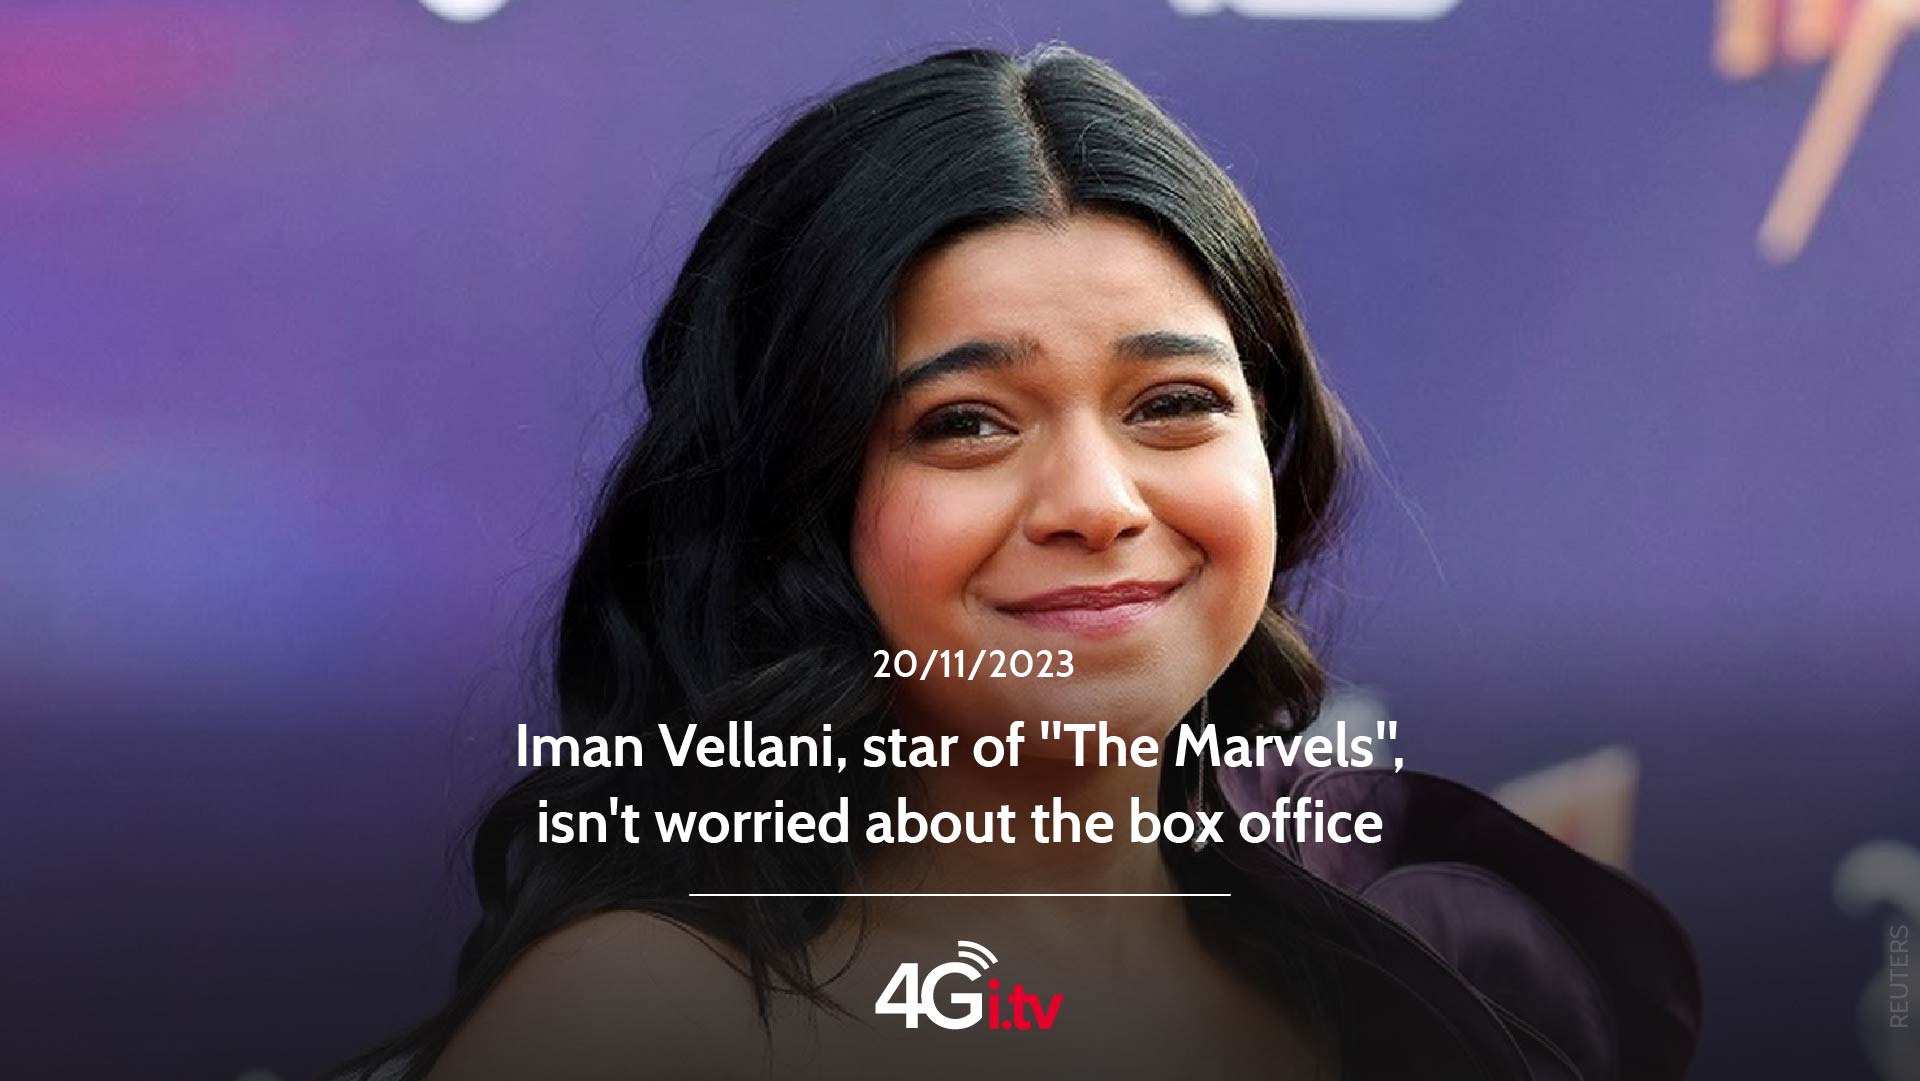 Подробнее о статье Iman Vellani, star of “The Marvels”, isn’t worried about the box office